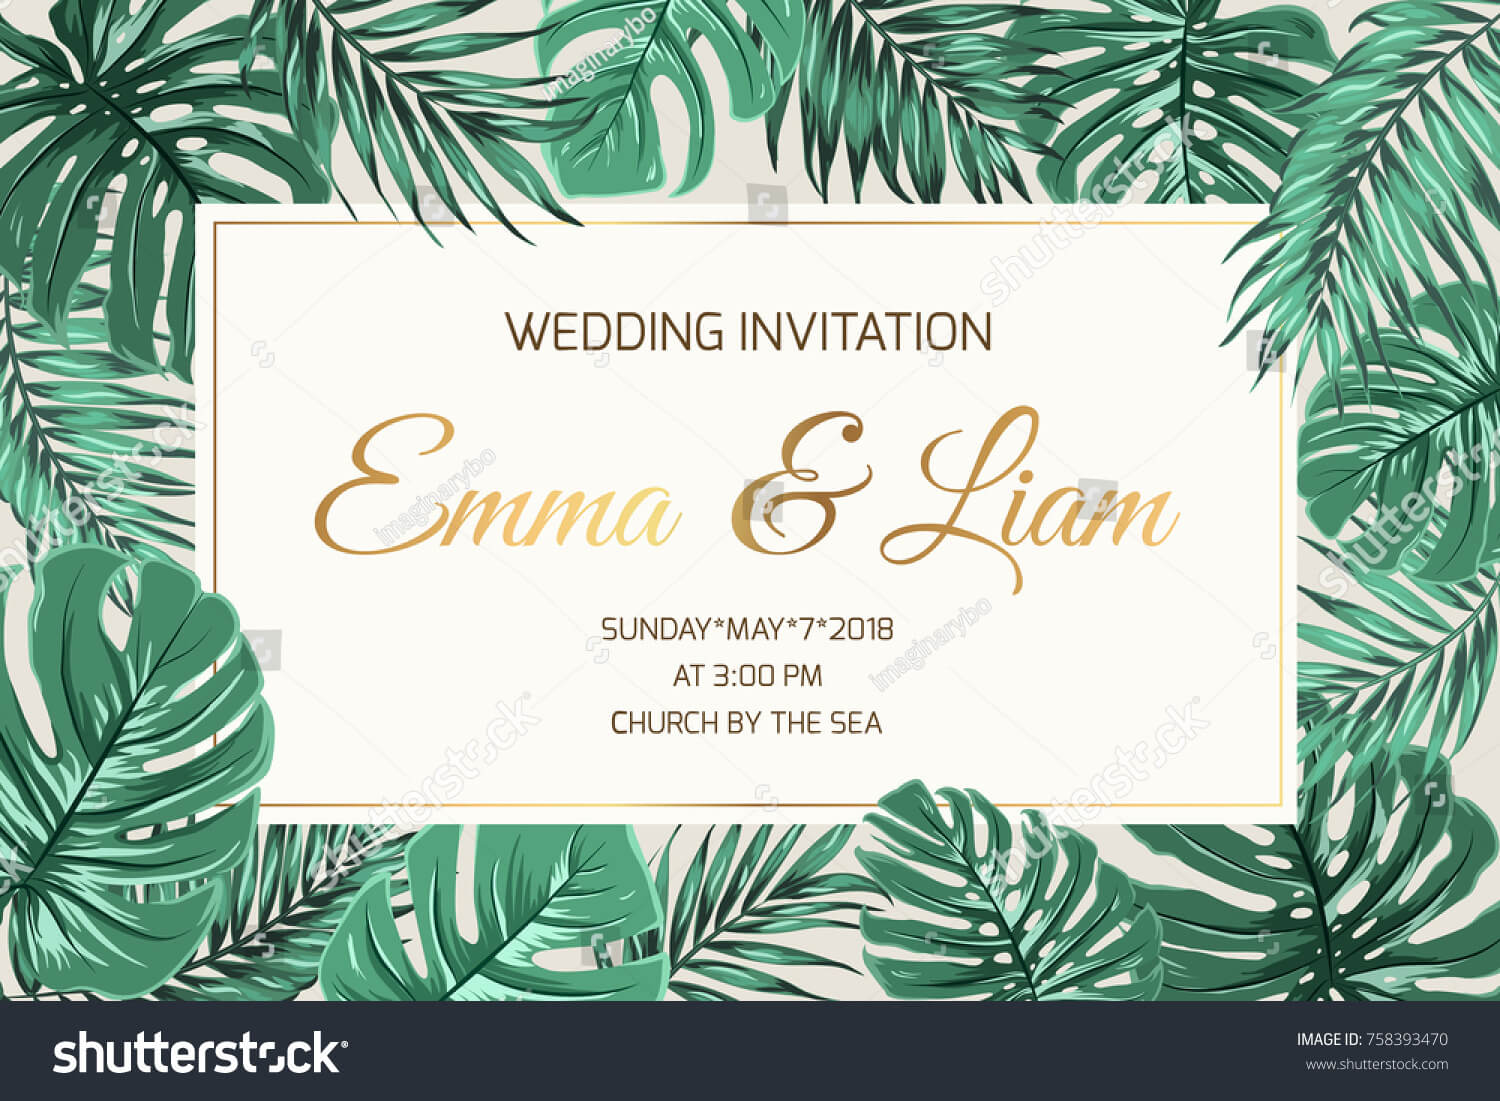 Wedding Marriage Event Invitation Card Template Stock Vector Inside Event Invitation Card Template